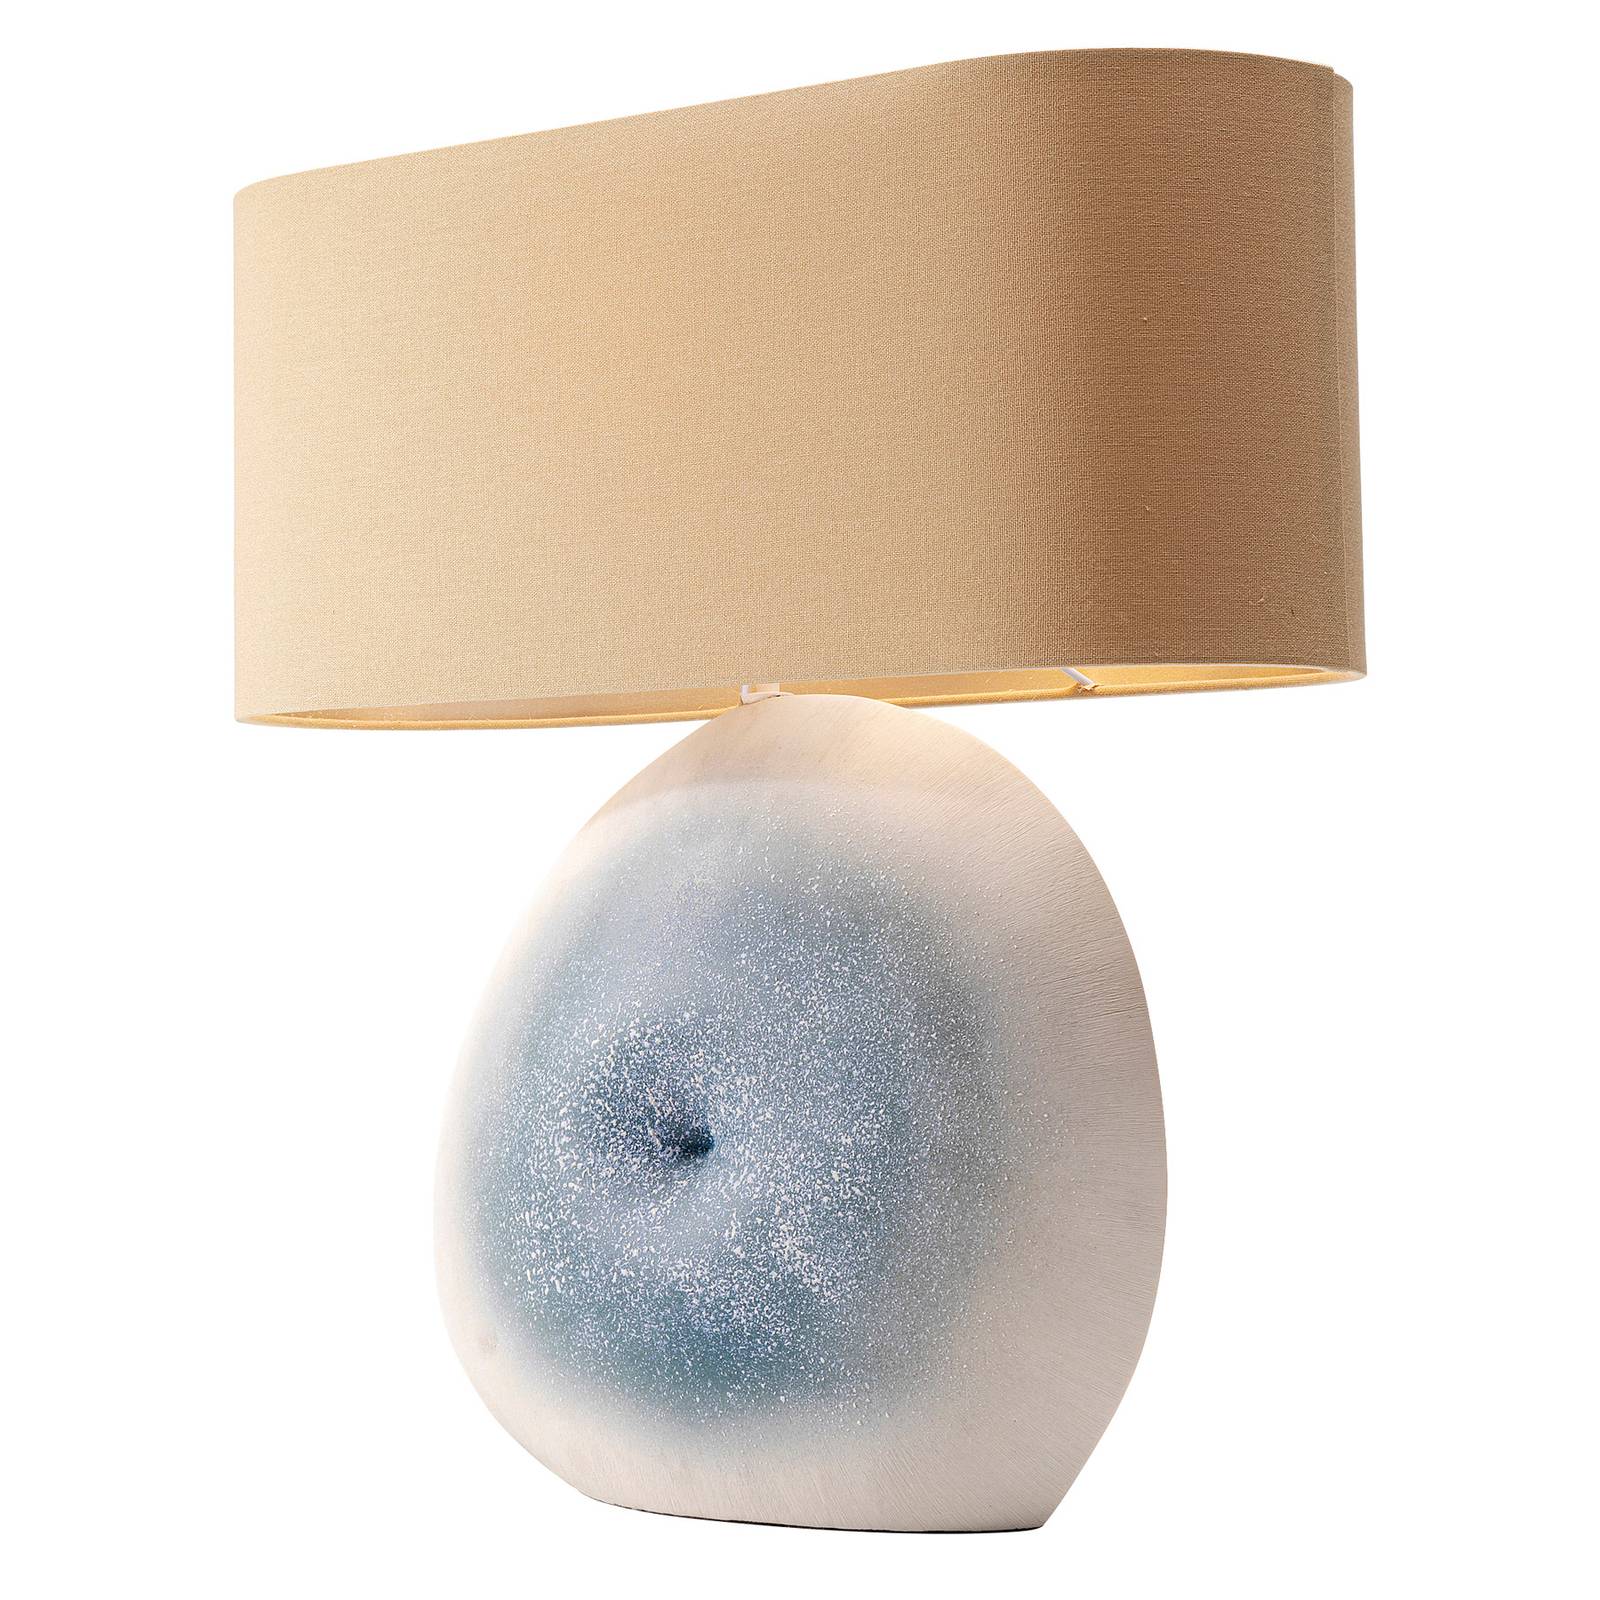 Image of KARE Agate lampe à poser céramique abat-jour tissu 4025621528012